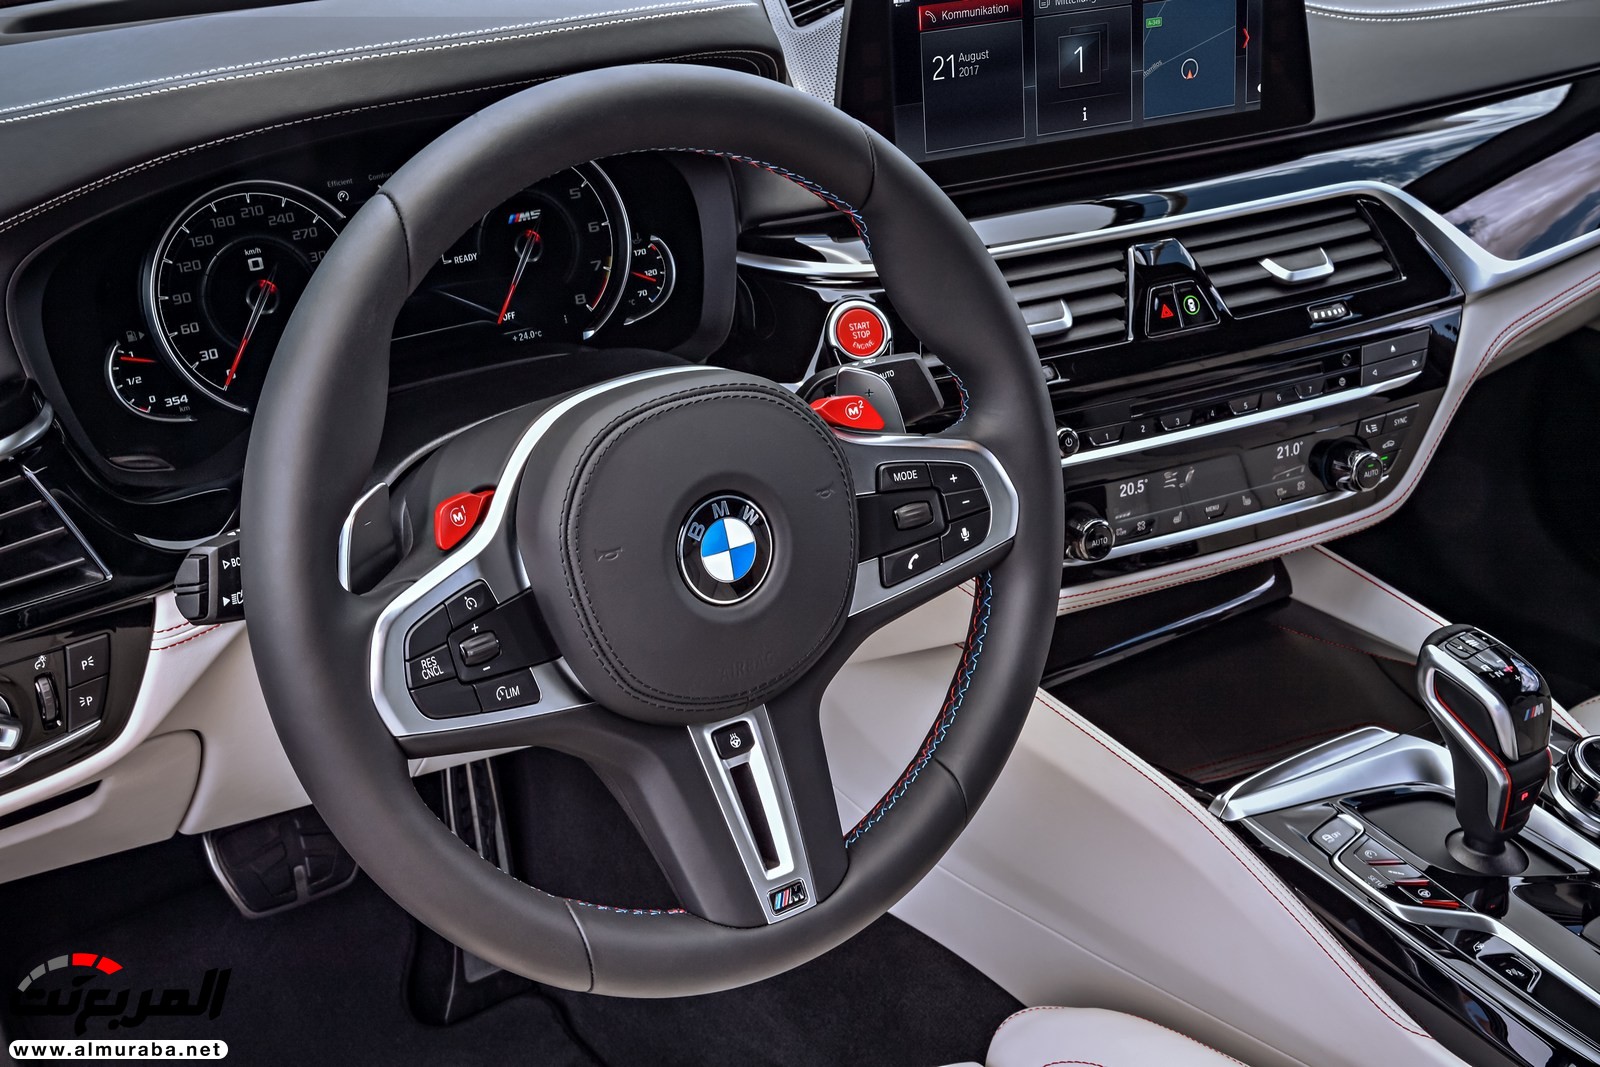 بي ام دبليو M5 2018 تكشف نفسها رسمياً بقوة ٦٠٠ حصان "صور ومواصفات" BMW 63